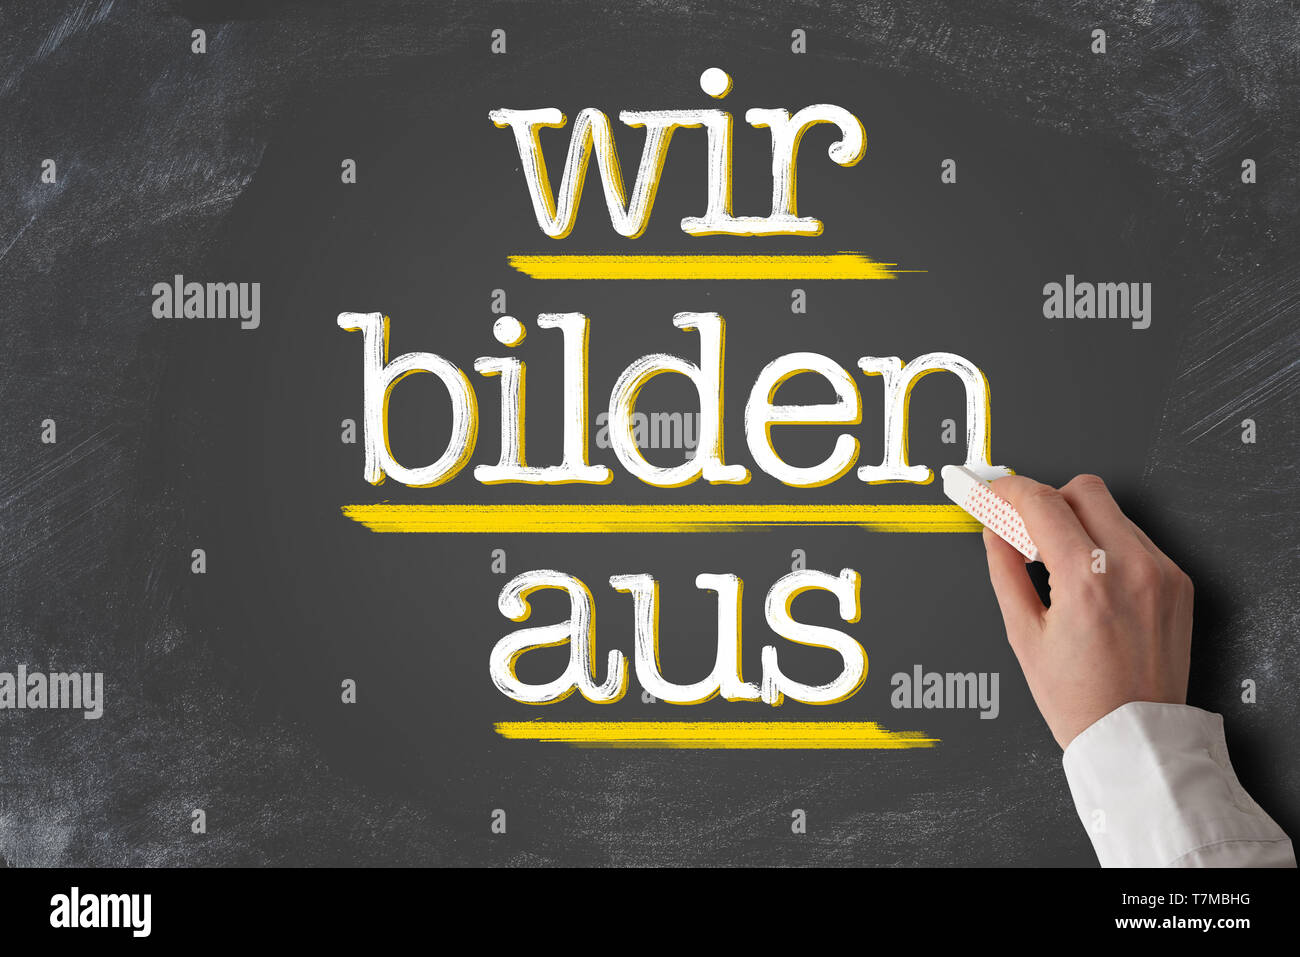 text WIR BILDEN AUS, German for we train apprentices, written on blackboard Stock Photo